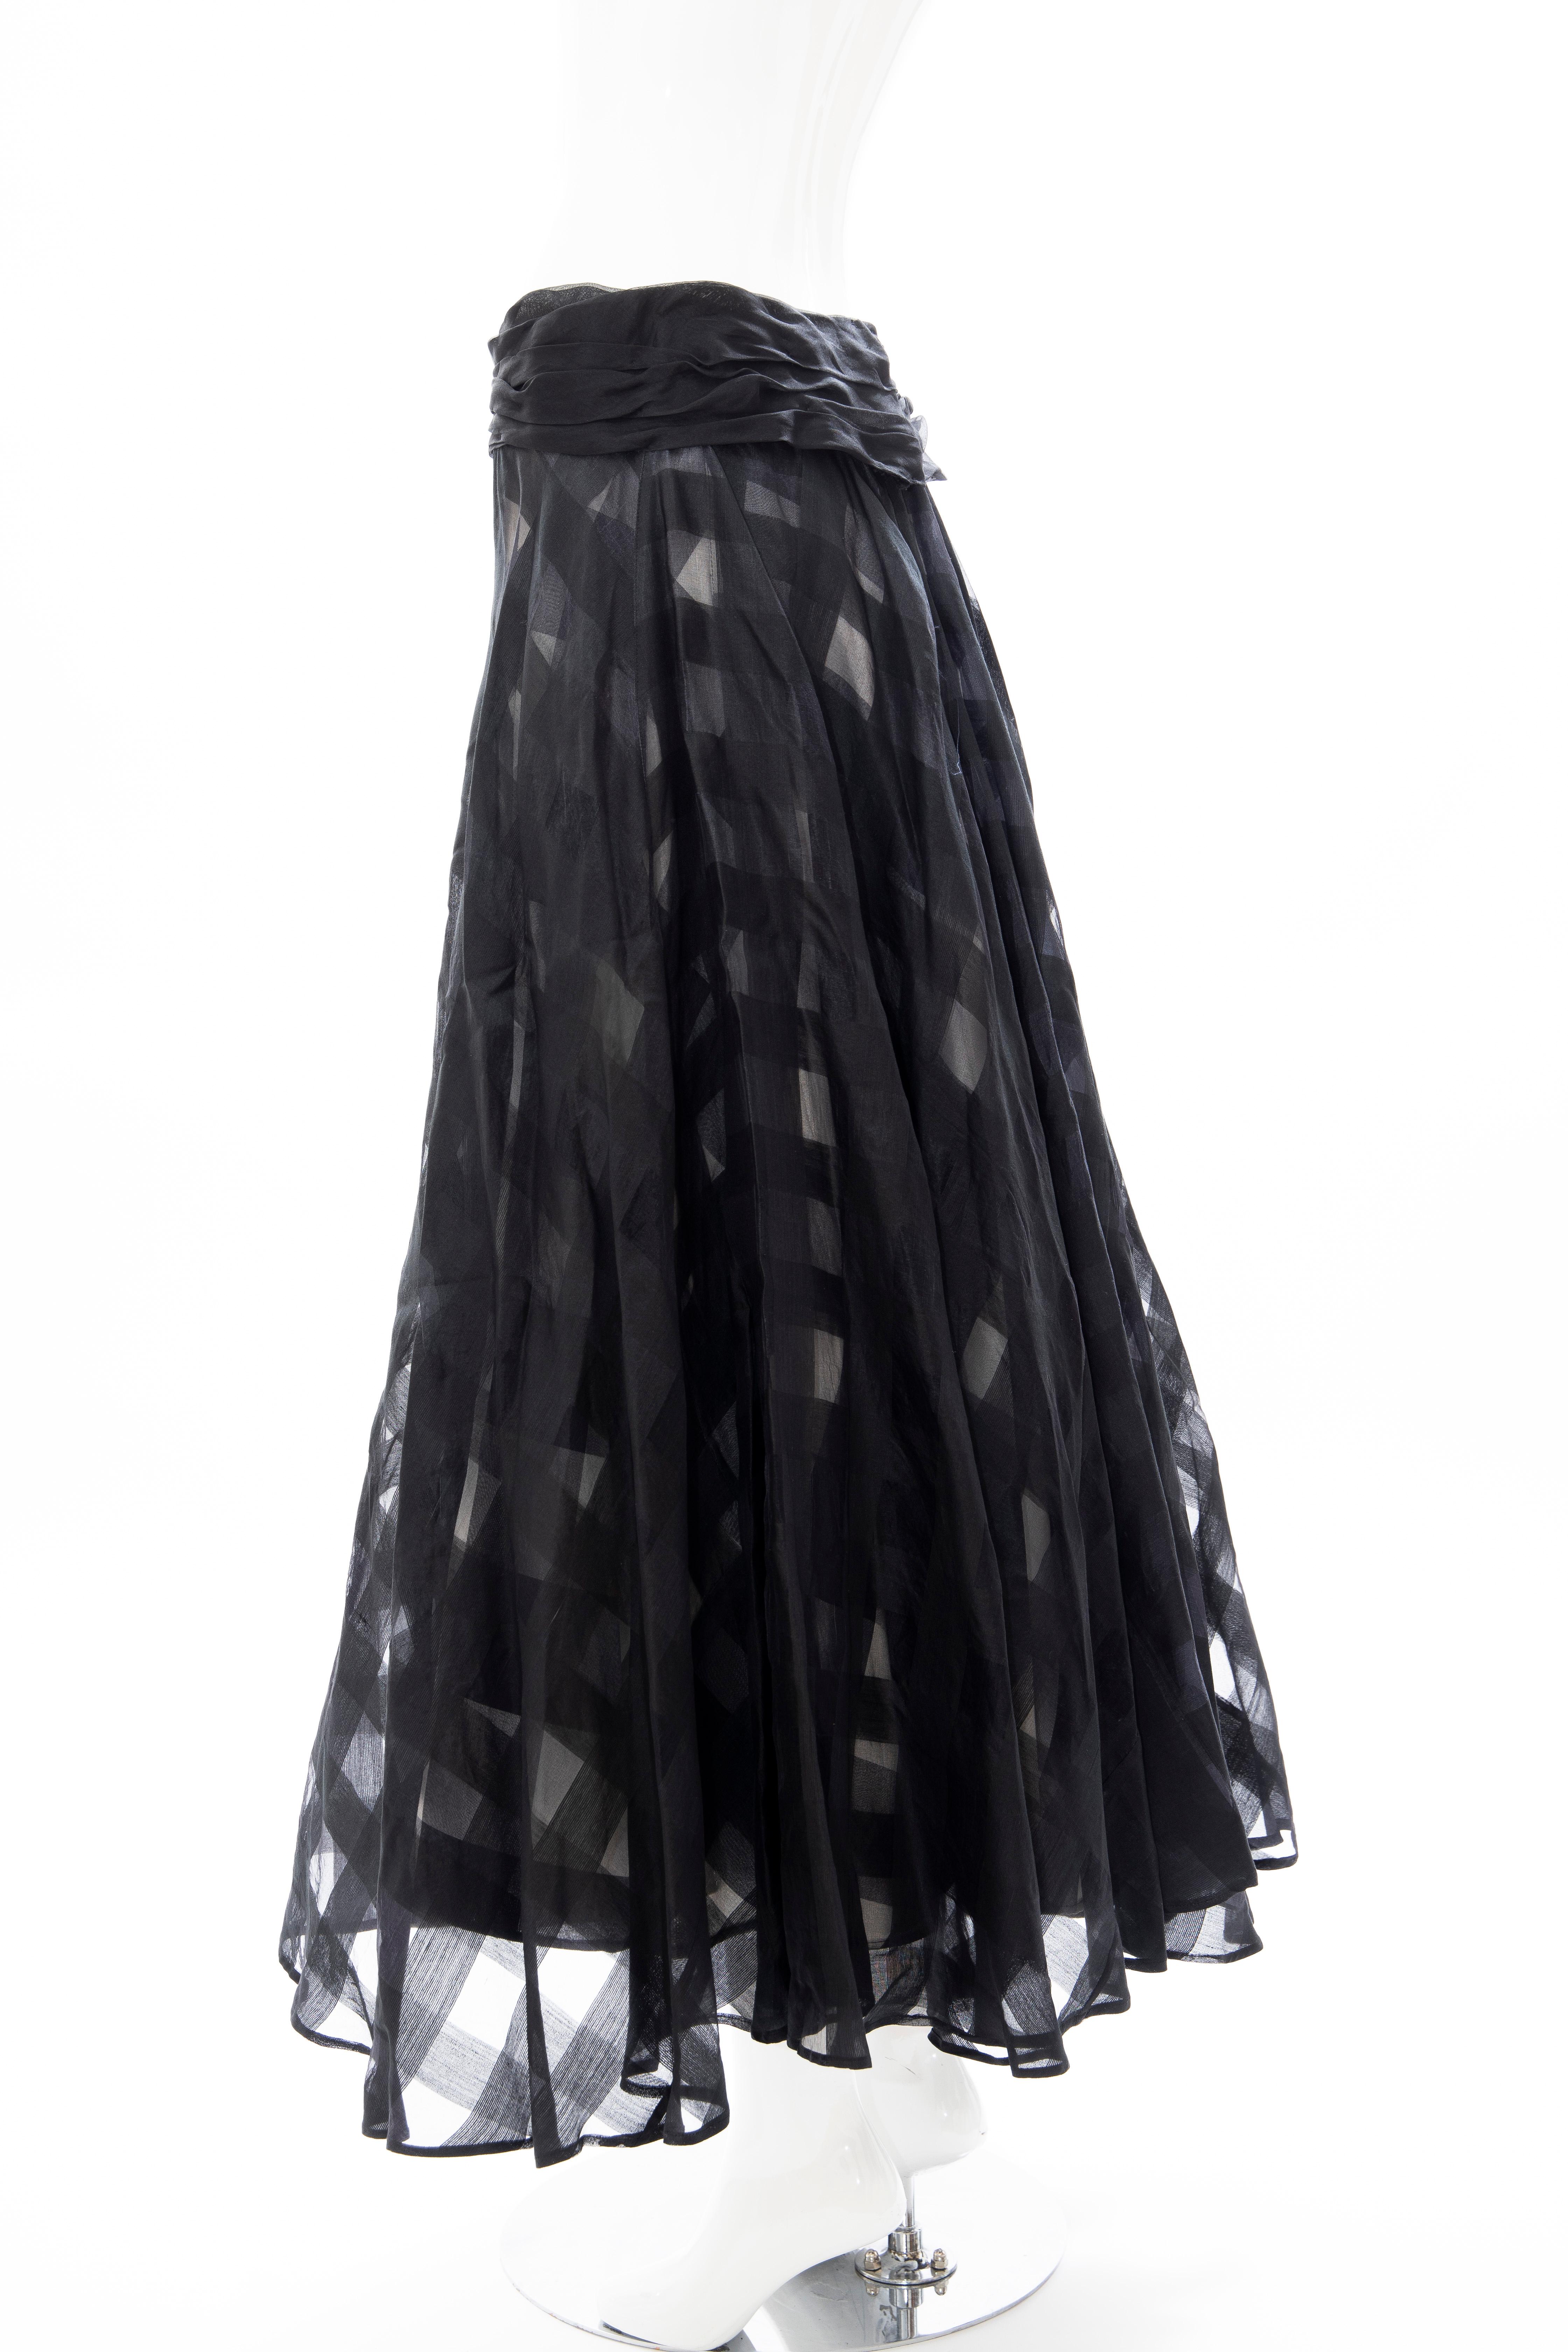 Olivier Theyskens Runway Black Silk Checkerboard Pattern Skirt, Spring 2000 For Sale 7